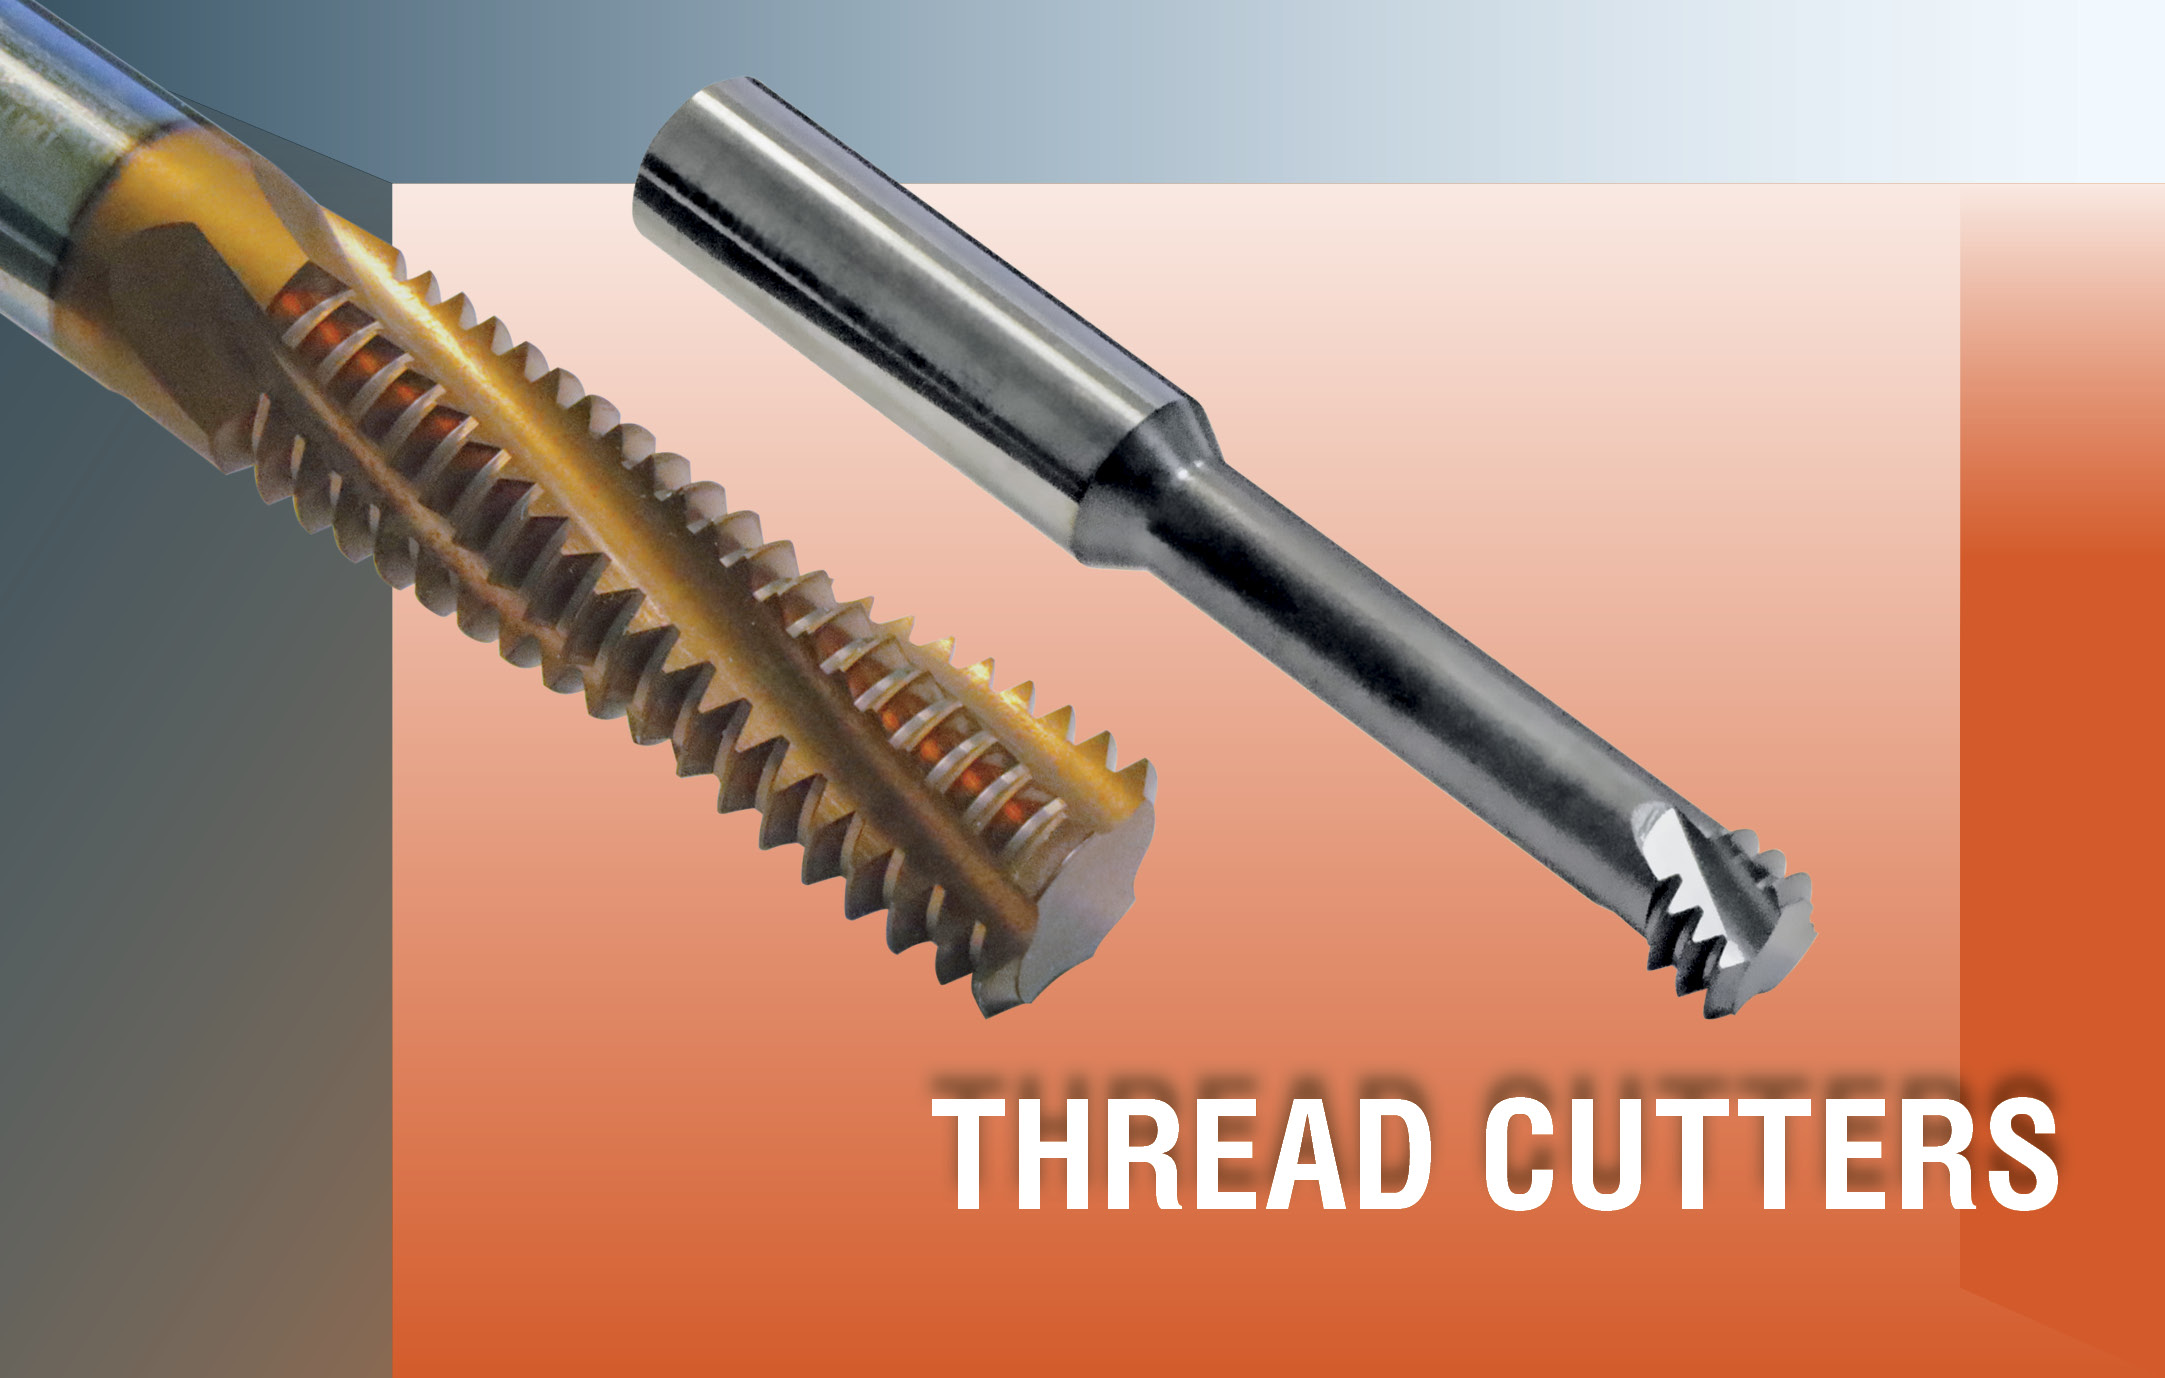 Thread cutters